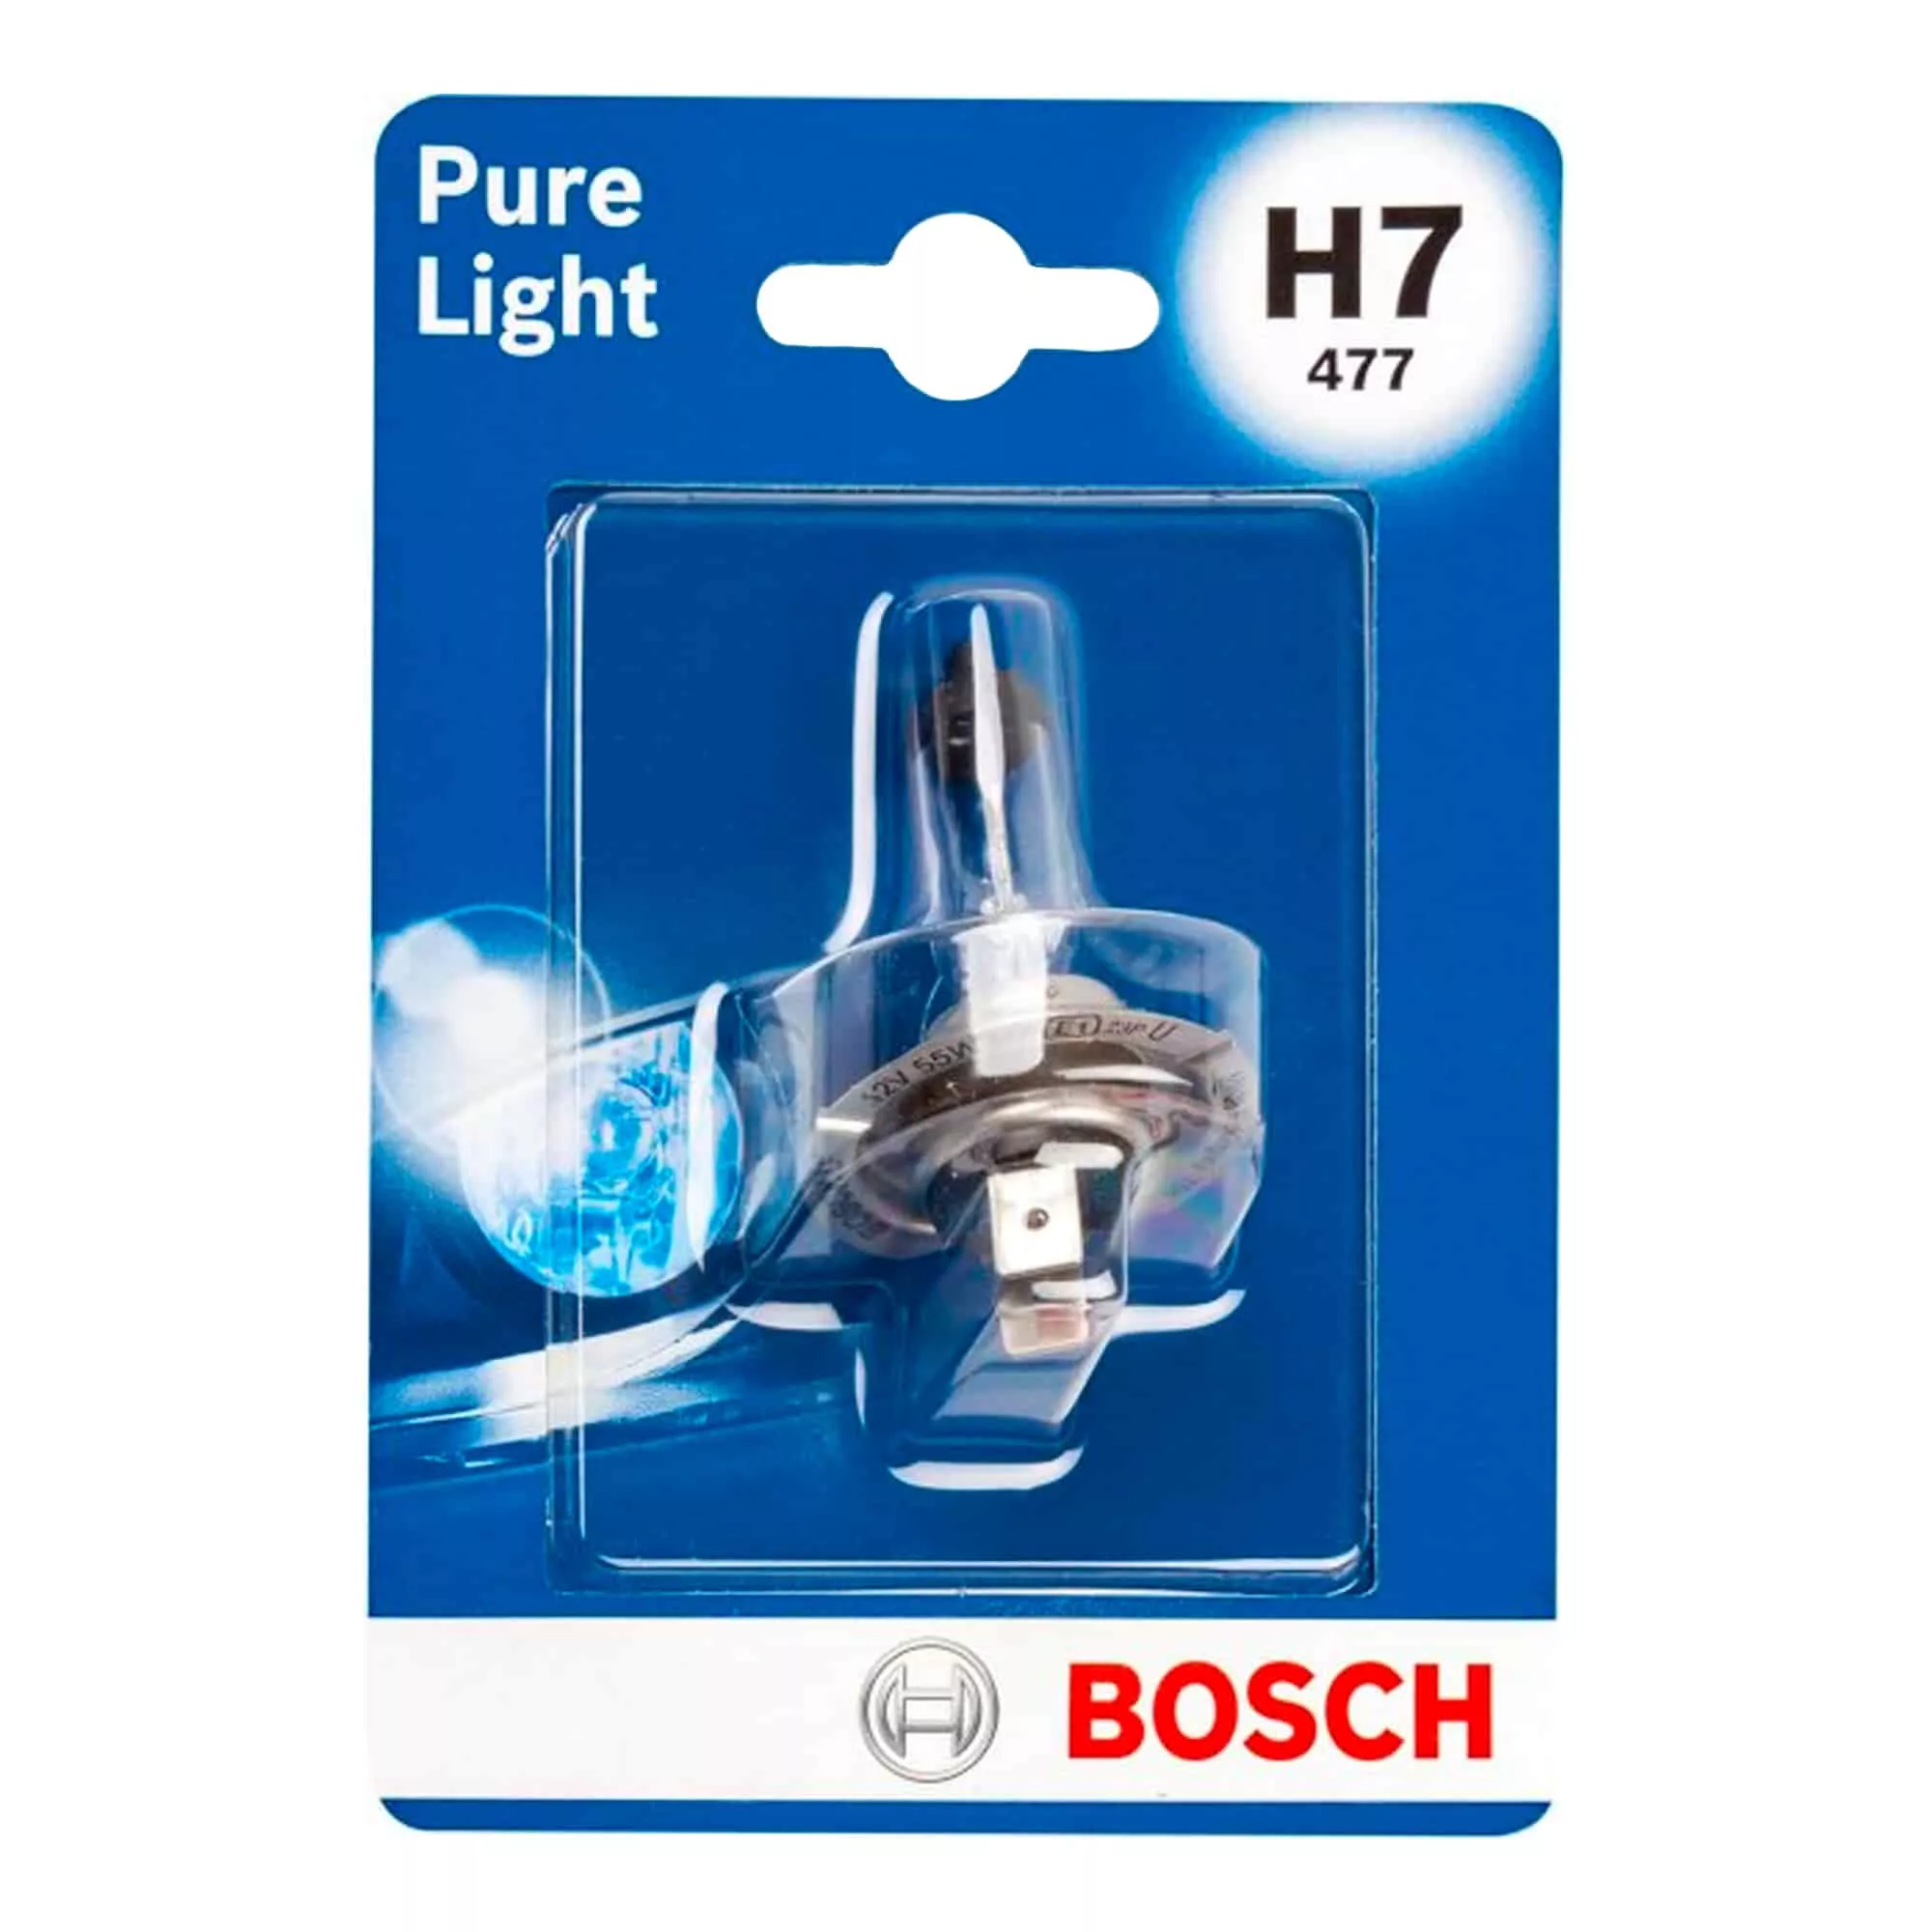 Автолампа Bosch Pure Light H7 (1 987 301 012) – фото, отзывы